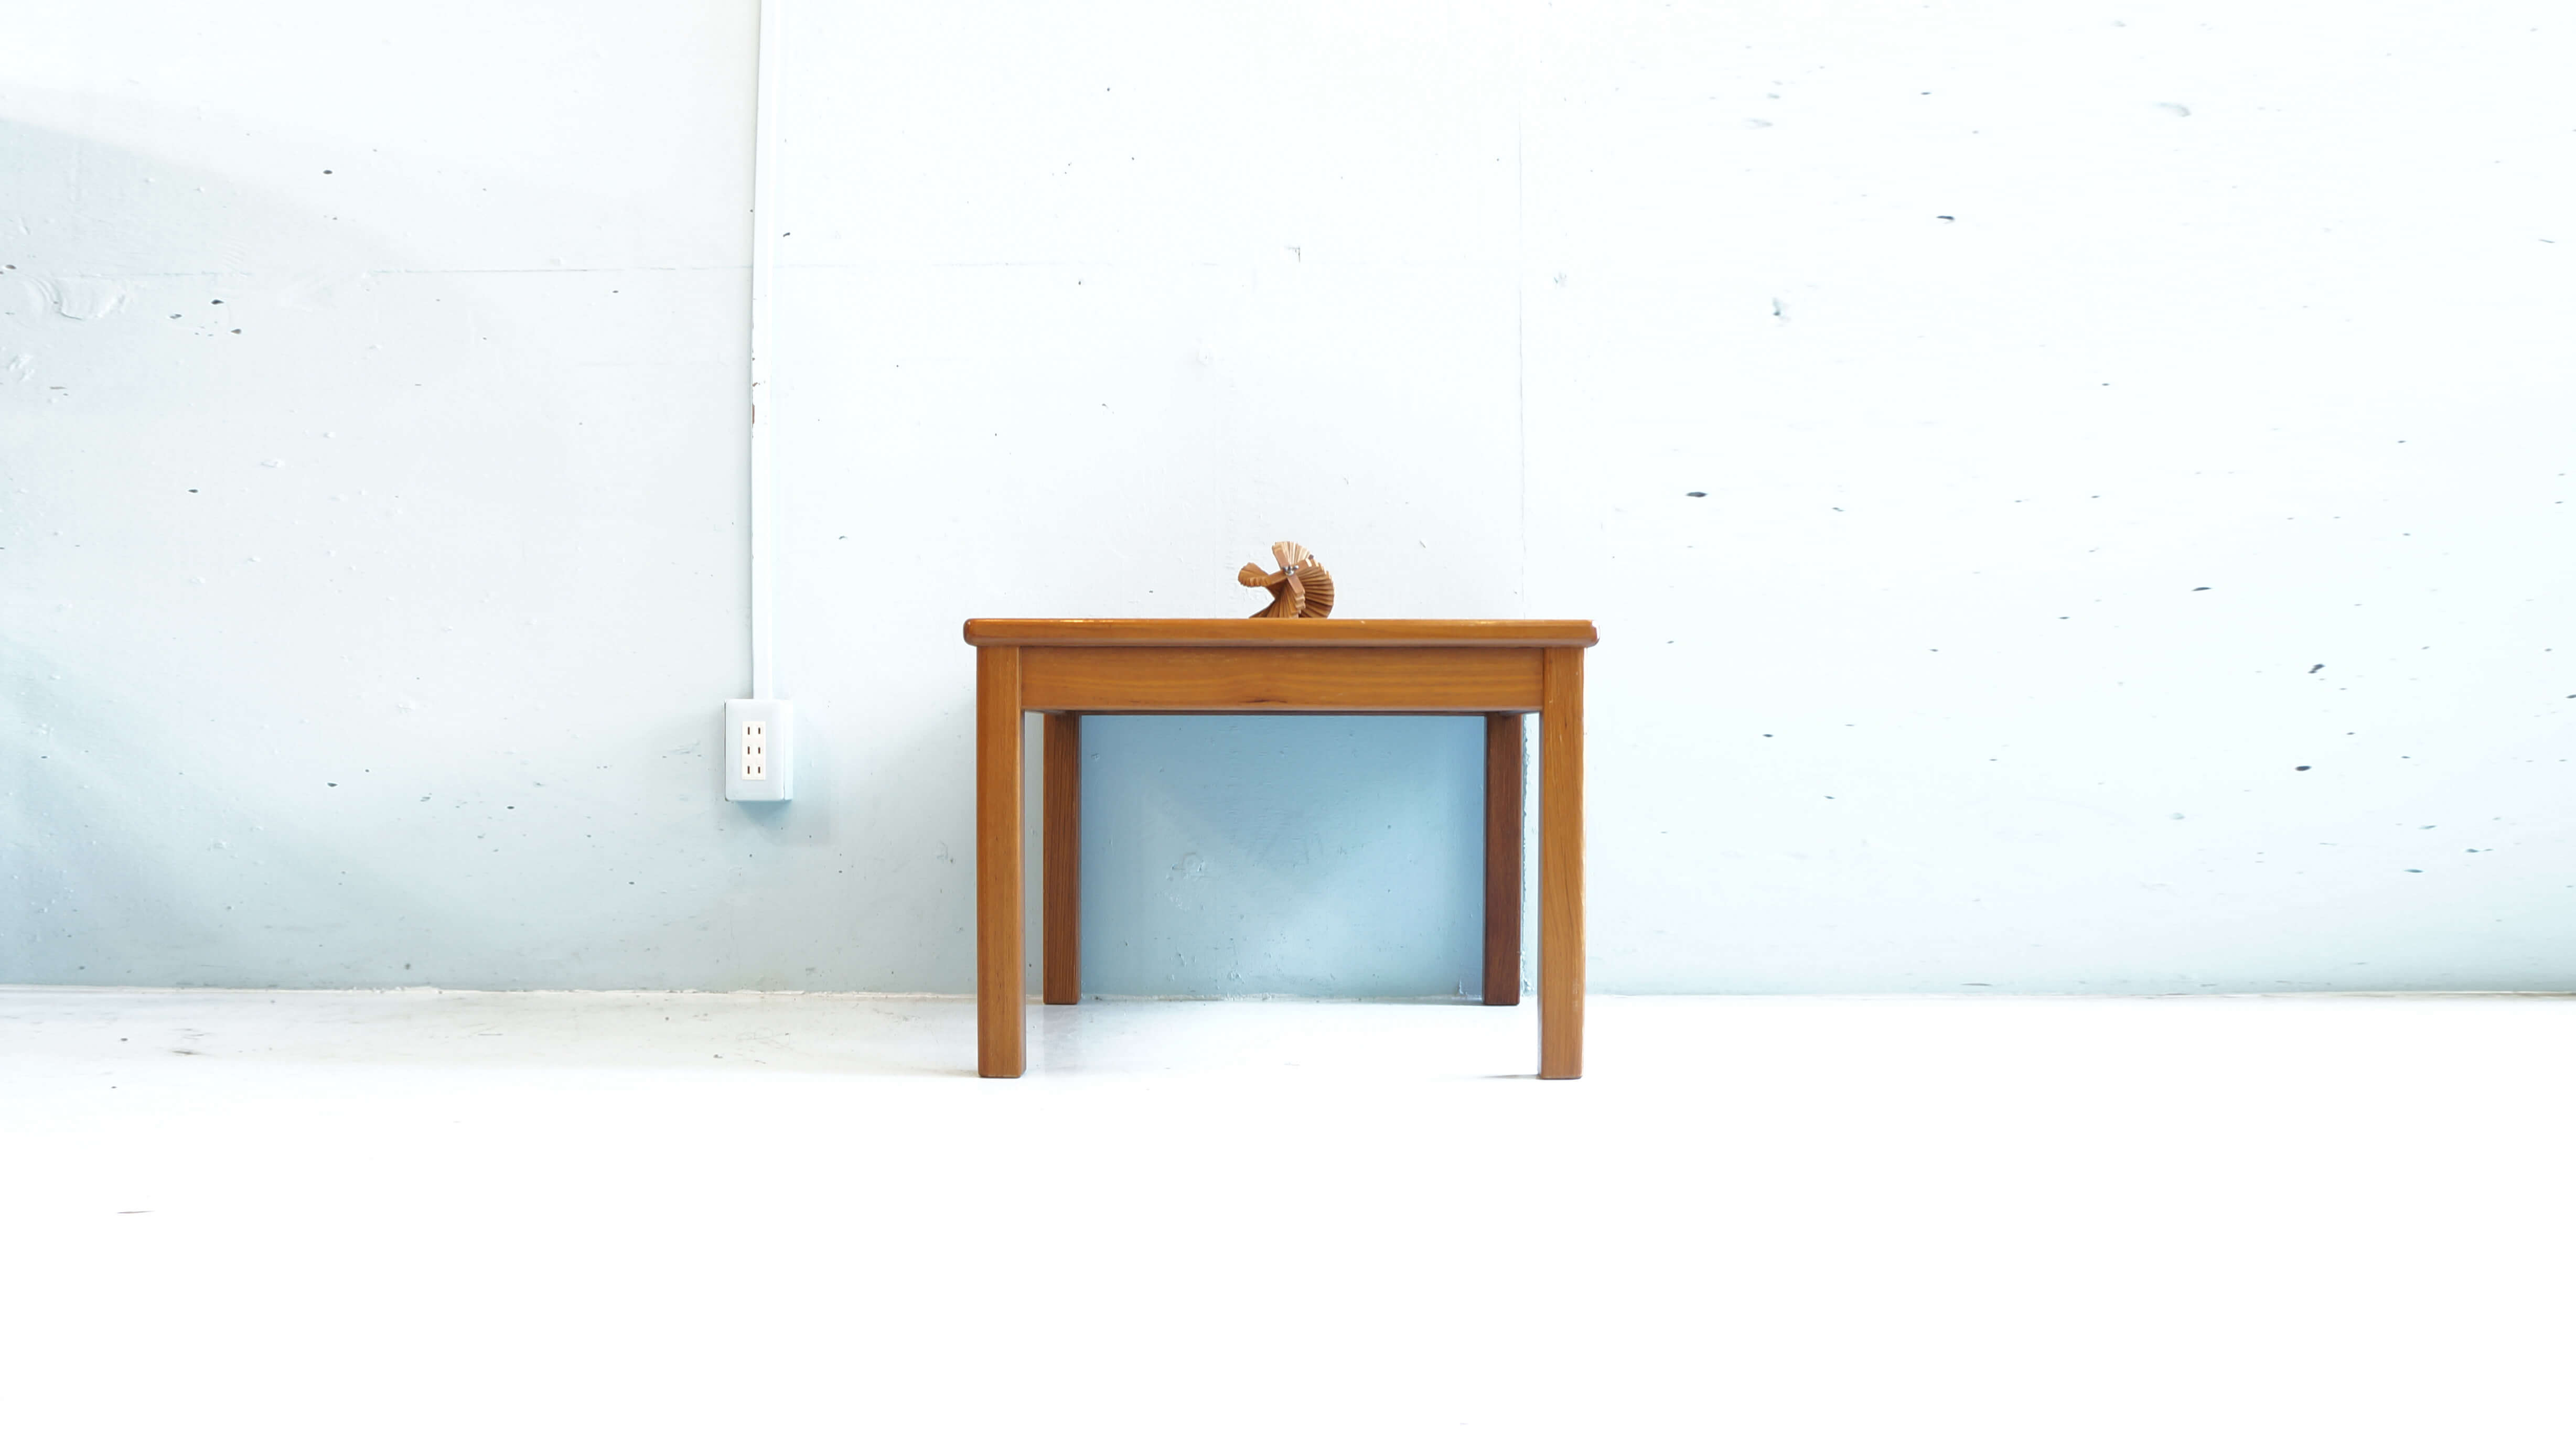 japan vintage teak wood low table / チーク材 ローテーブル ジャパンビンテージ